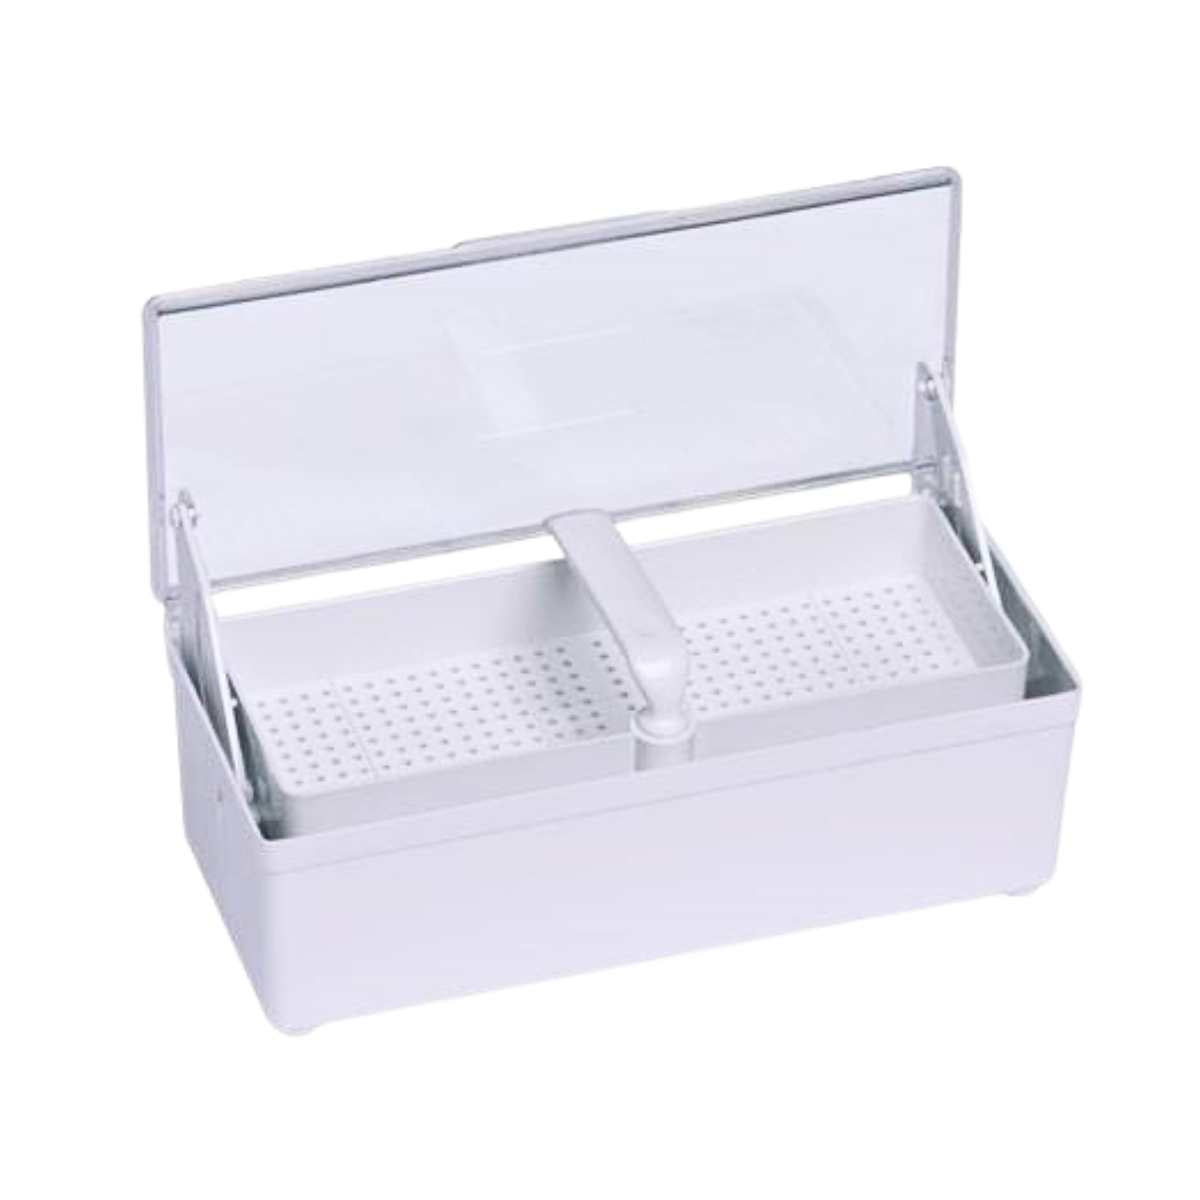 Larident Disinfectant Sterilization Tool Box